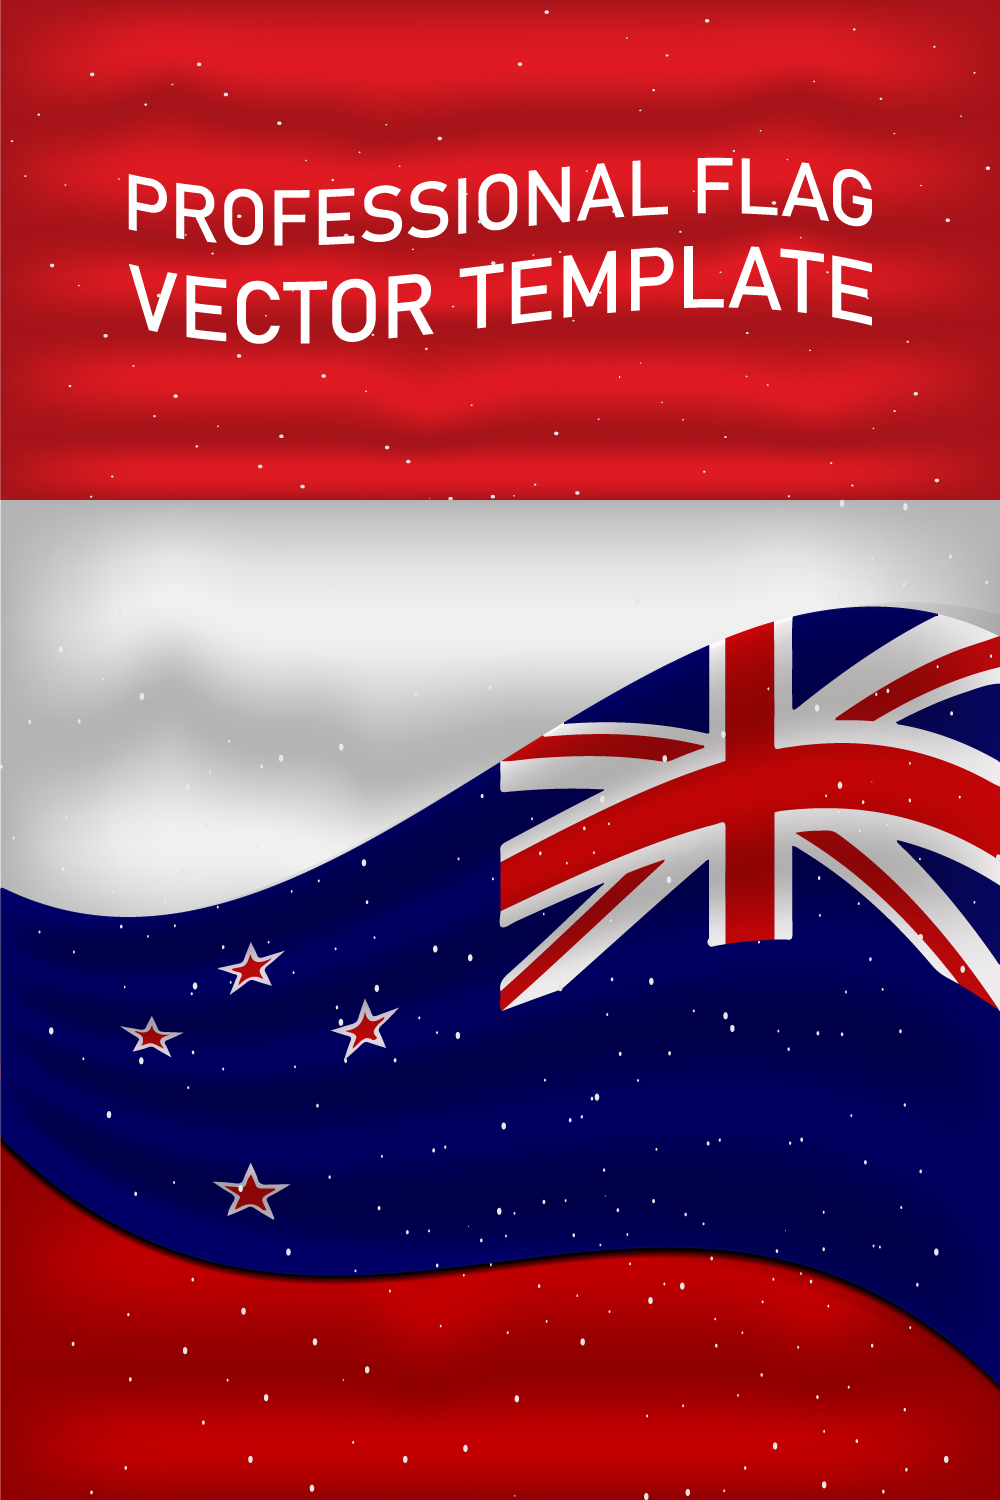 Exquisite image of New Zealand flag.